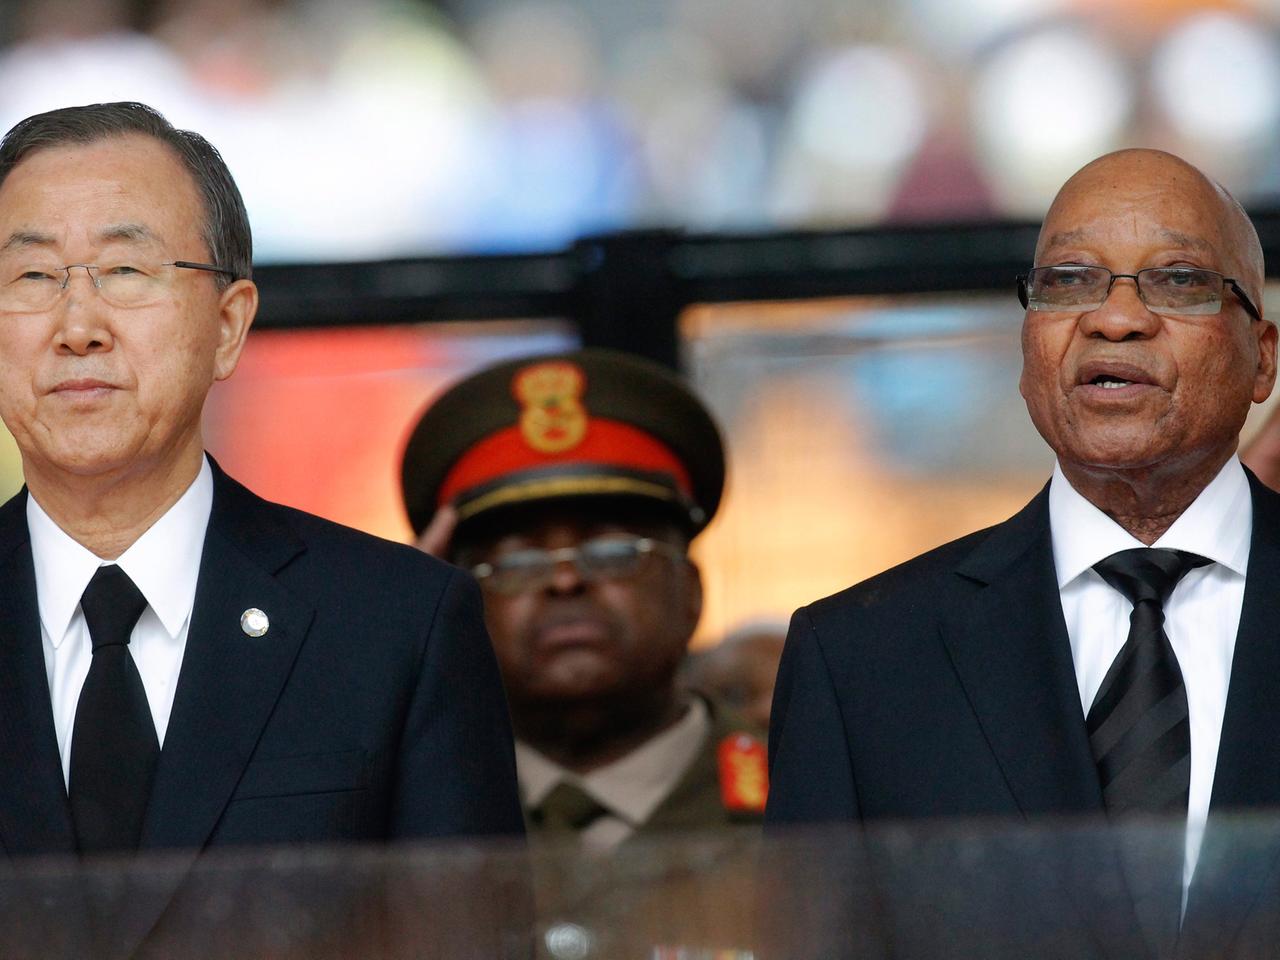 UN-Generalsekretär Ban Ki Moon und der südafrikanische Präsident Jacob Zuma